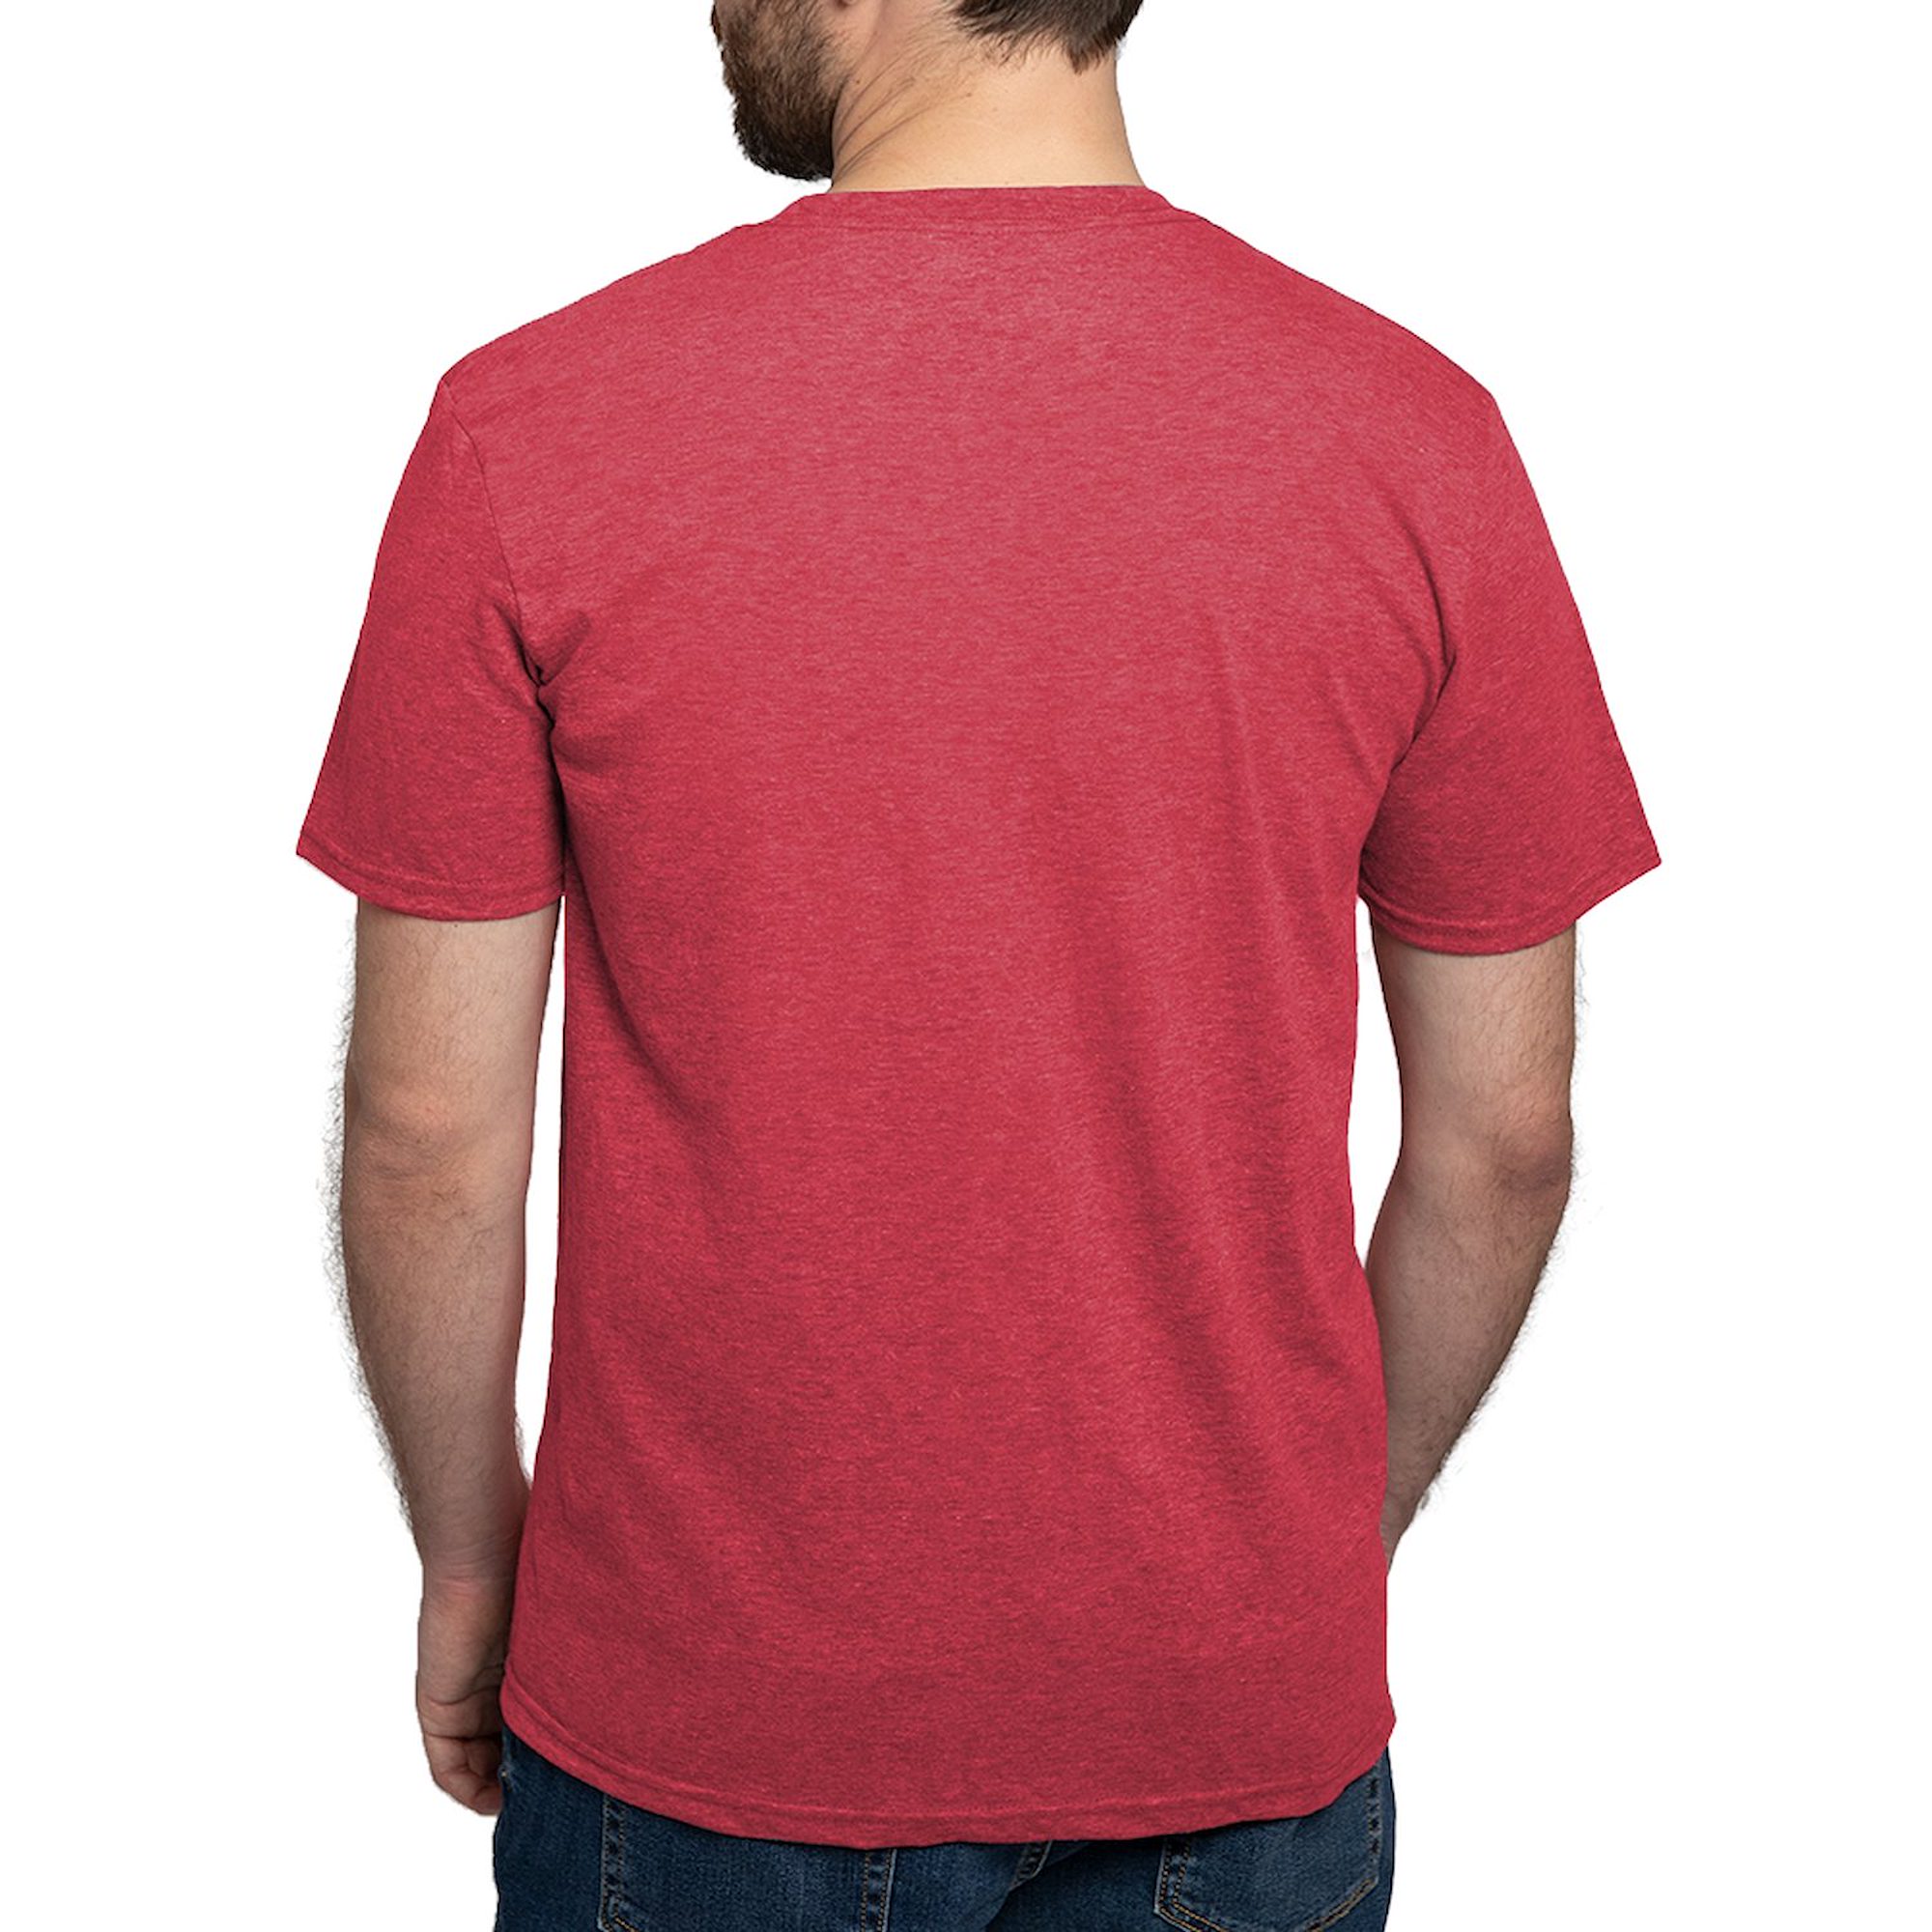 CafePress - The Man Behind The Bump T Shirt - Mens Tri-blend T-Shirt - image 2 of 4